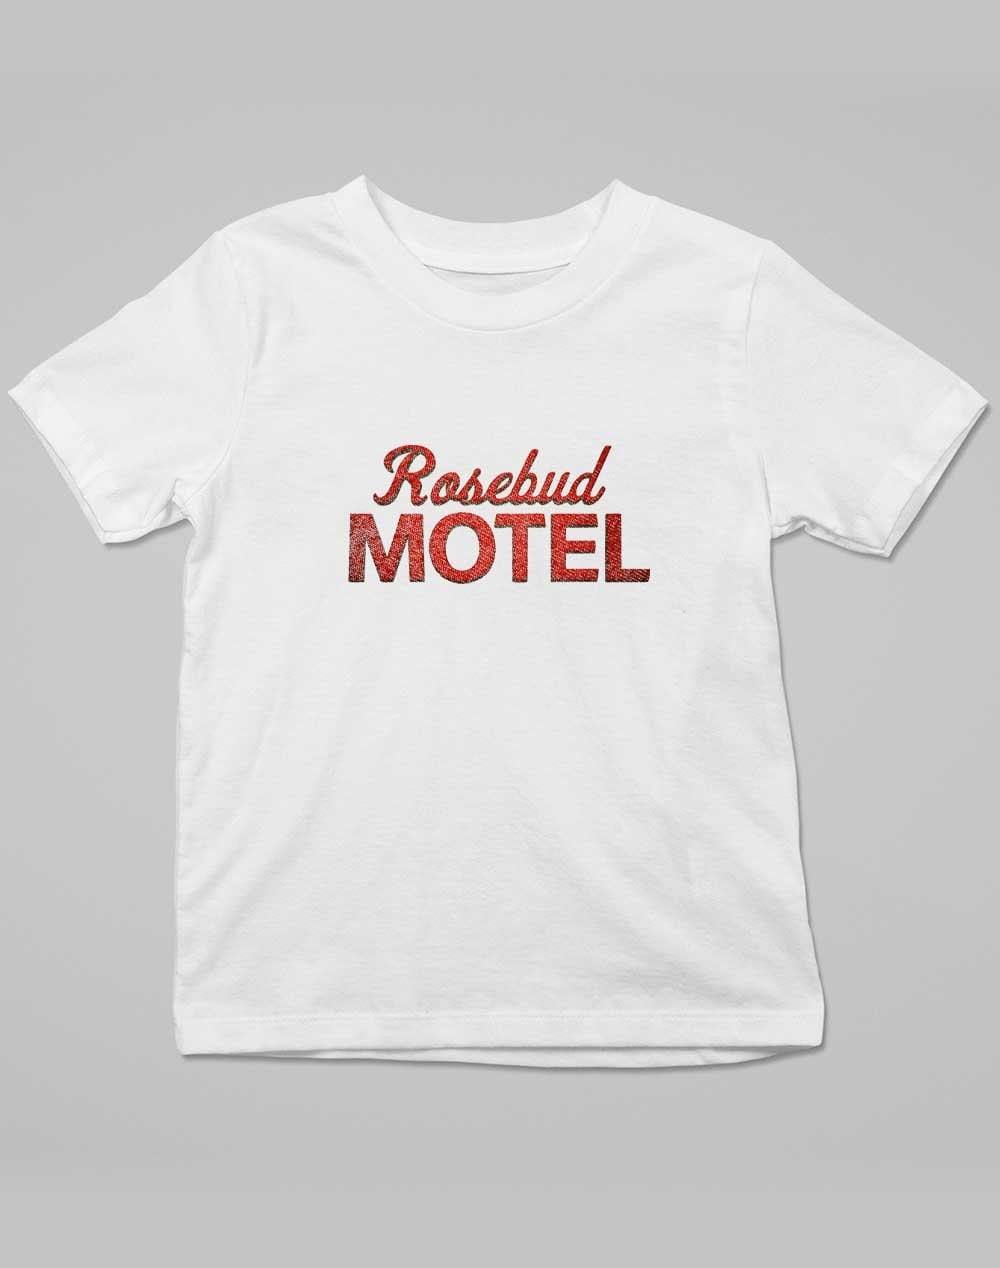 Rosebud Motel Kids T-Shirt 3-4 years / White  - Off World Tees